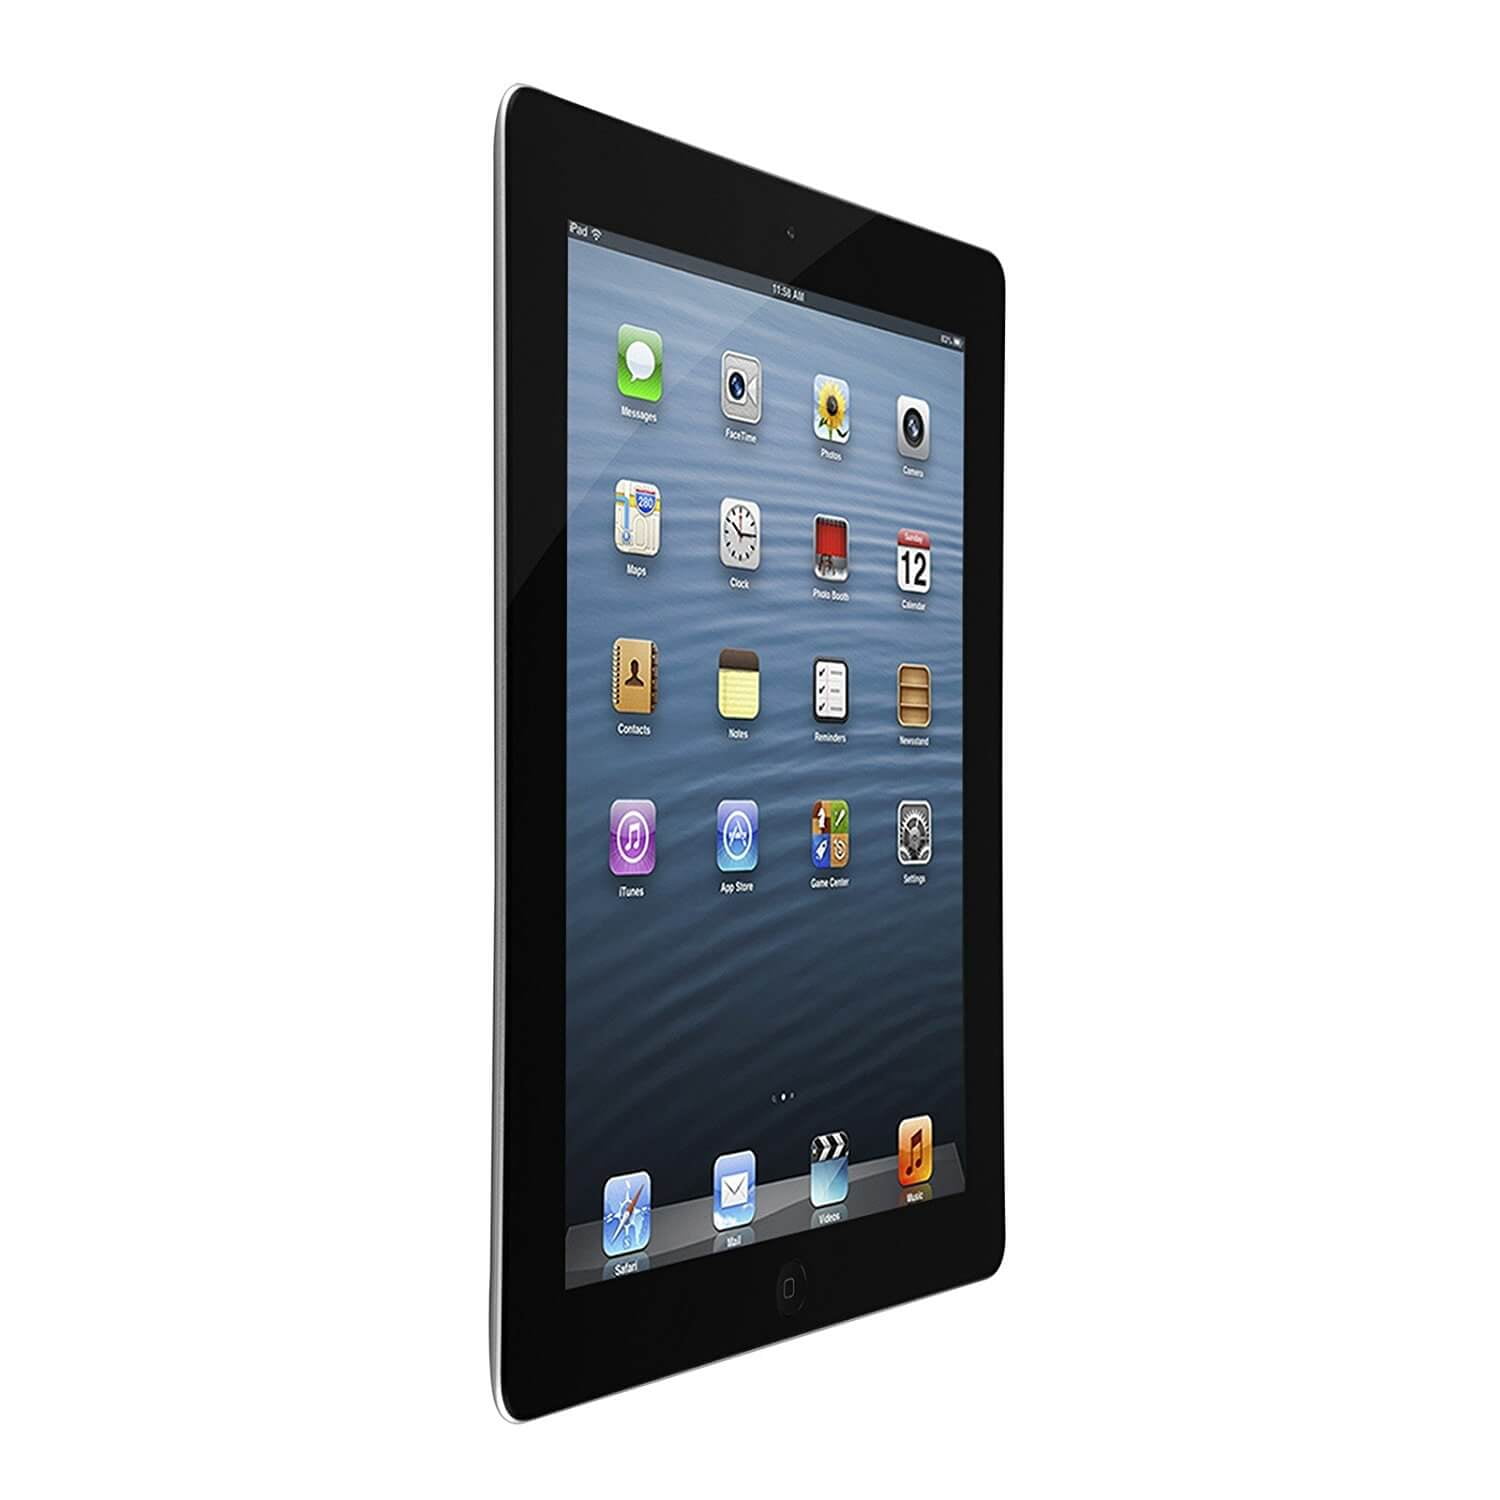 White Apple iPad 3 Retina Display Tablet  WiFi 4G GSM 16GB/ 32GB/64GB Black 